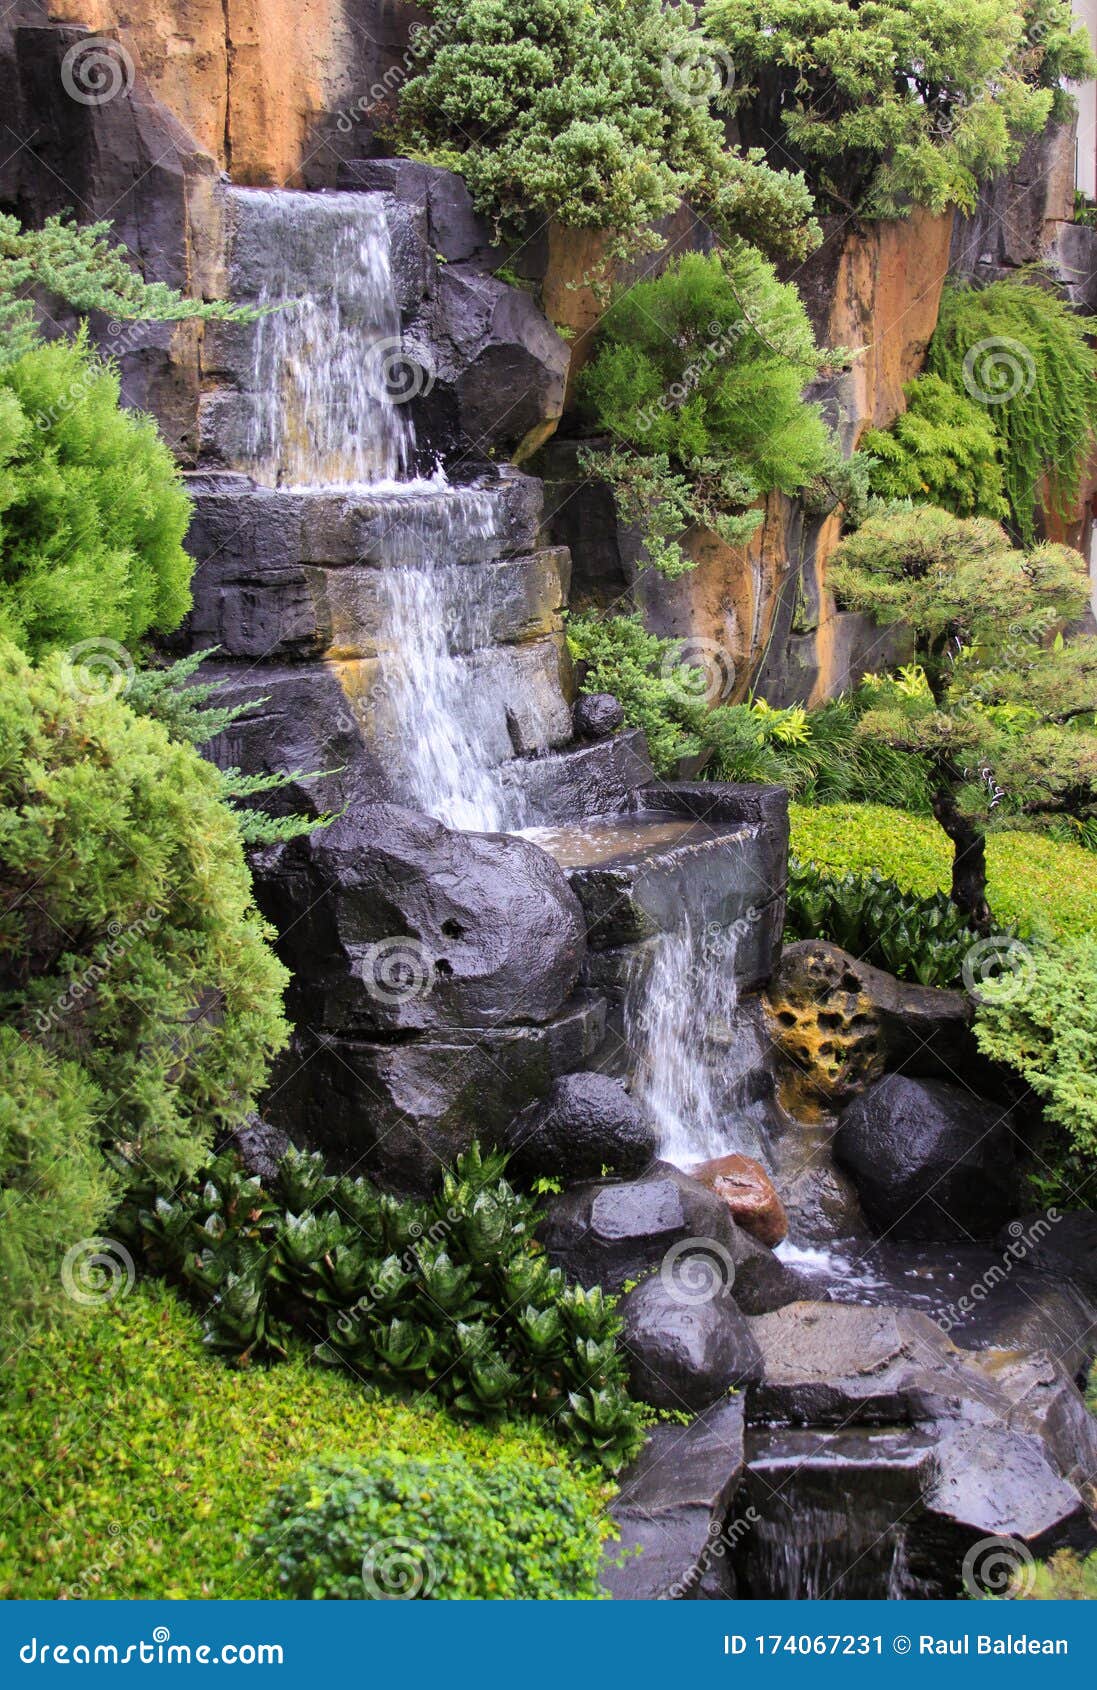 Waterfall In Interior Patio Garden With River And Lush Vegetation In Yogyakarta Java Indonesia Stock Image - Image Of Black Fish 174067231